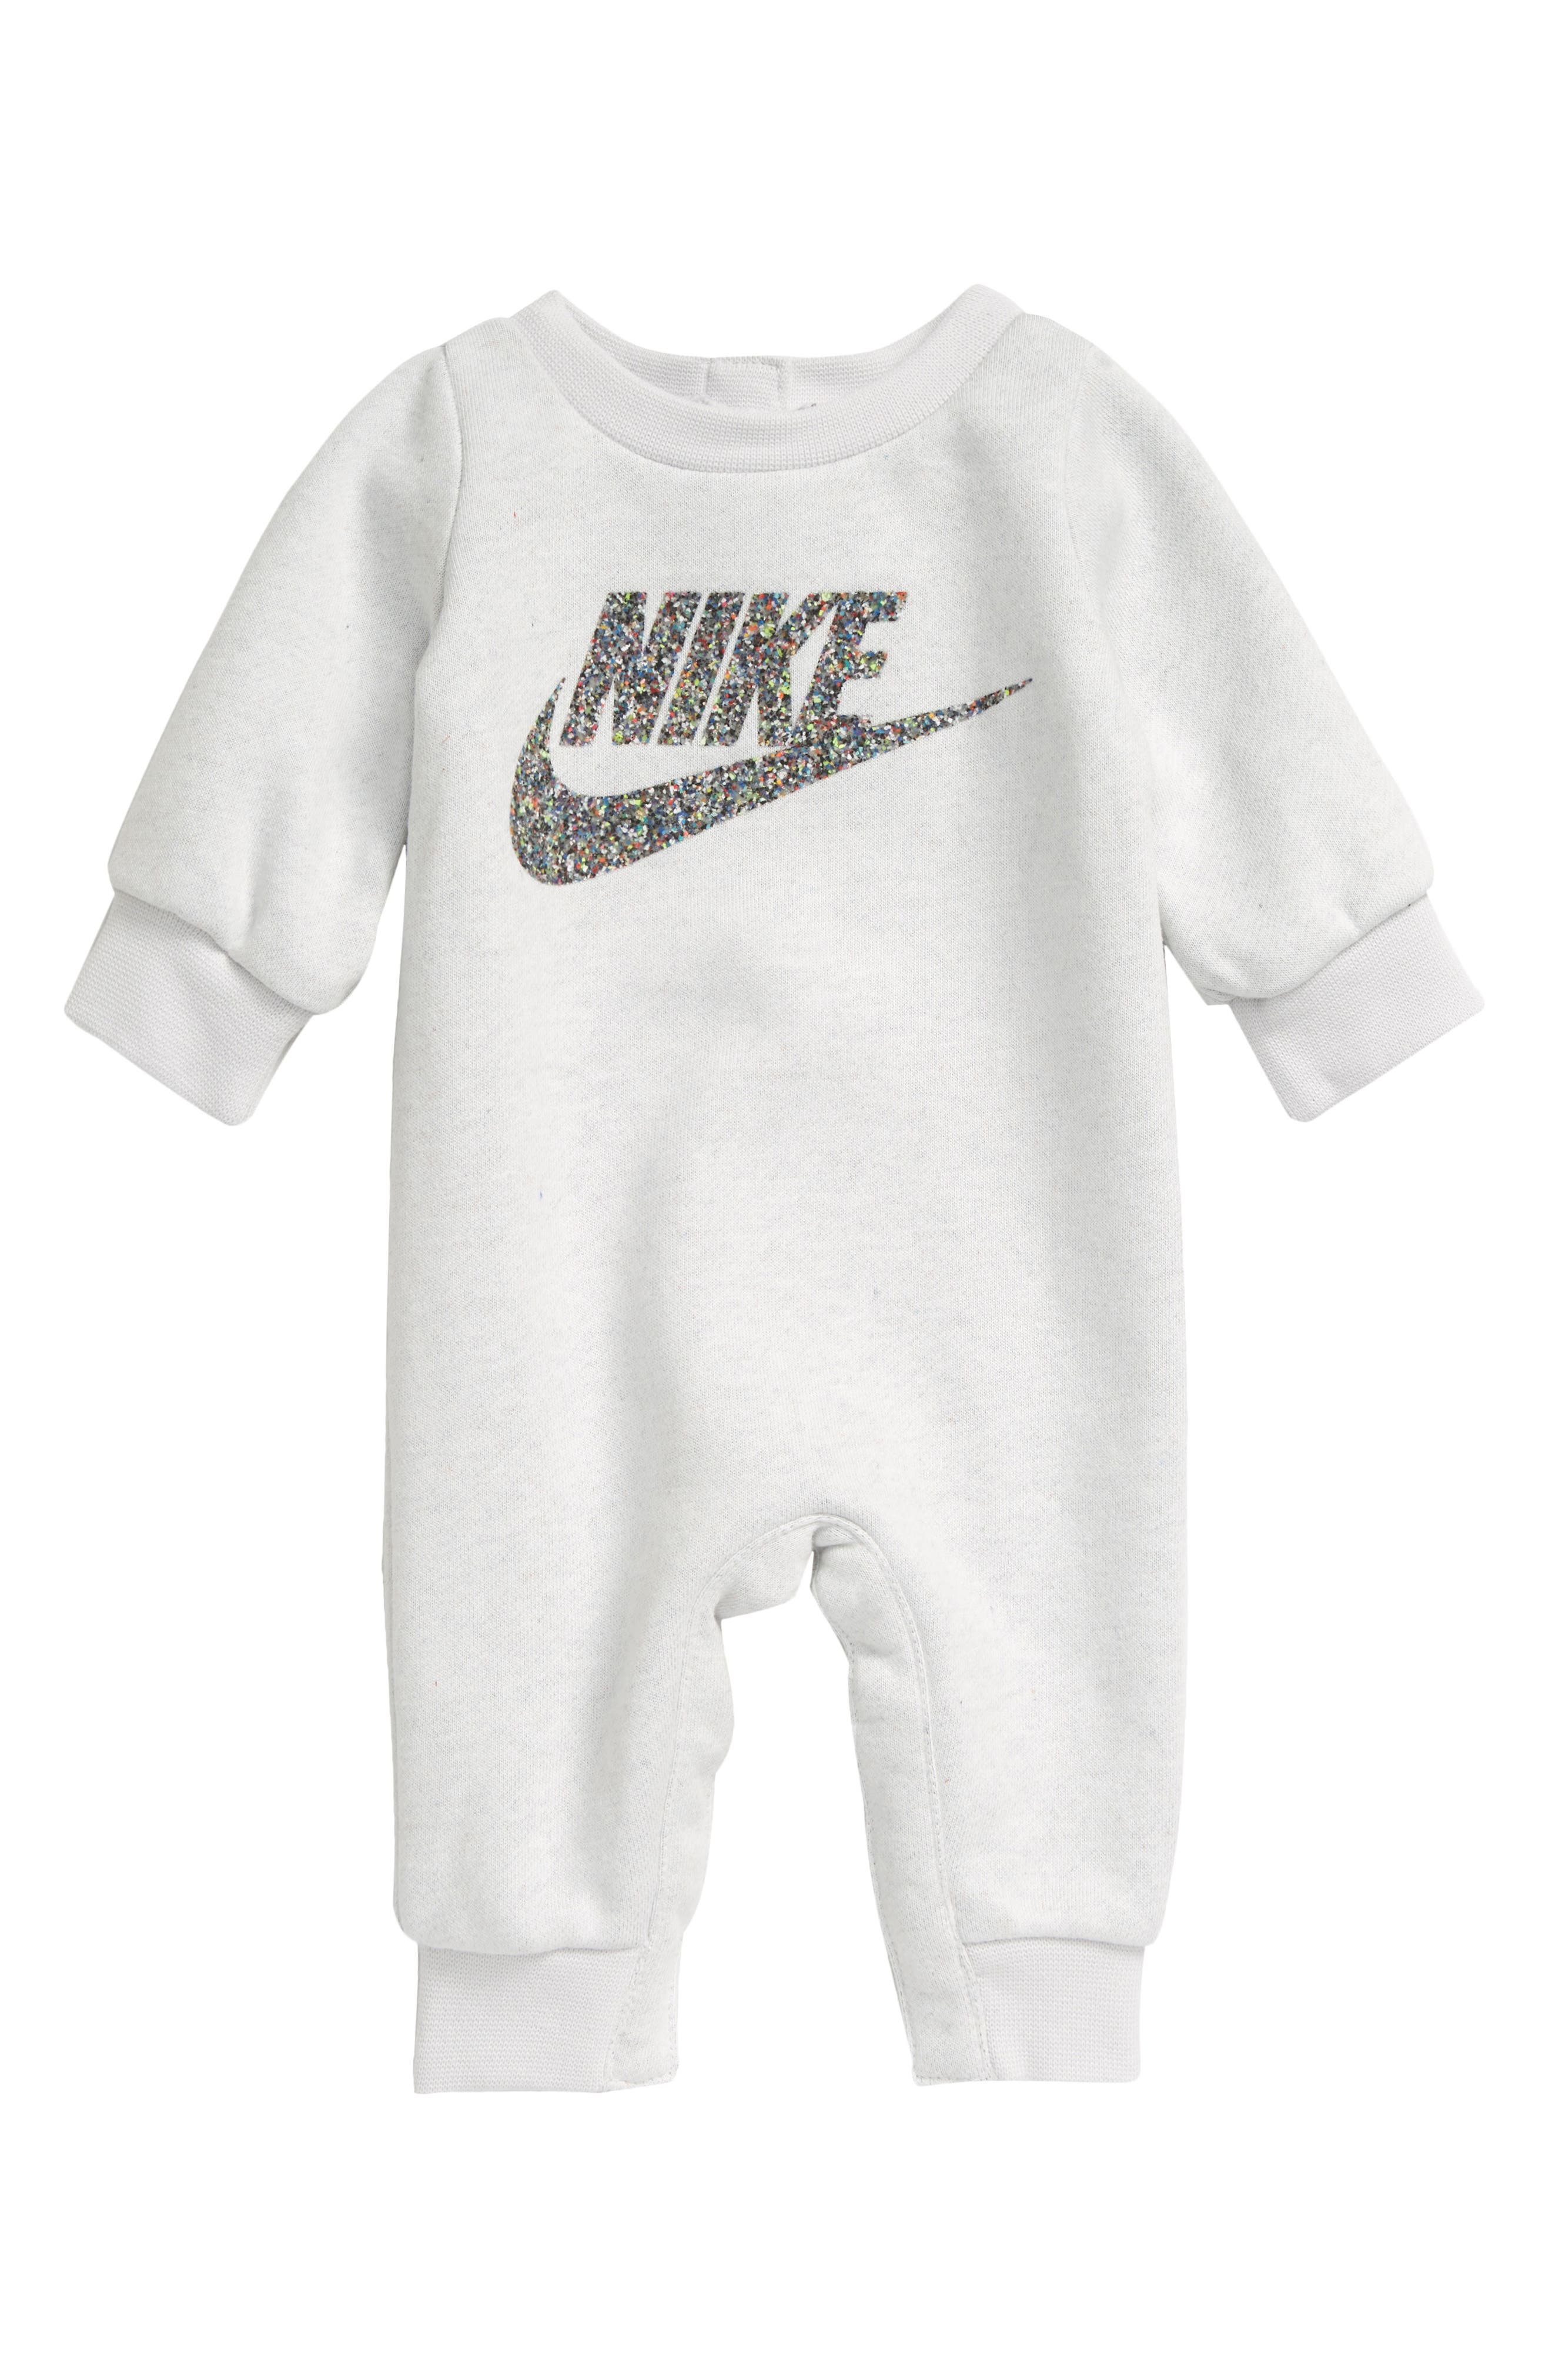 infant nike apparel